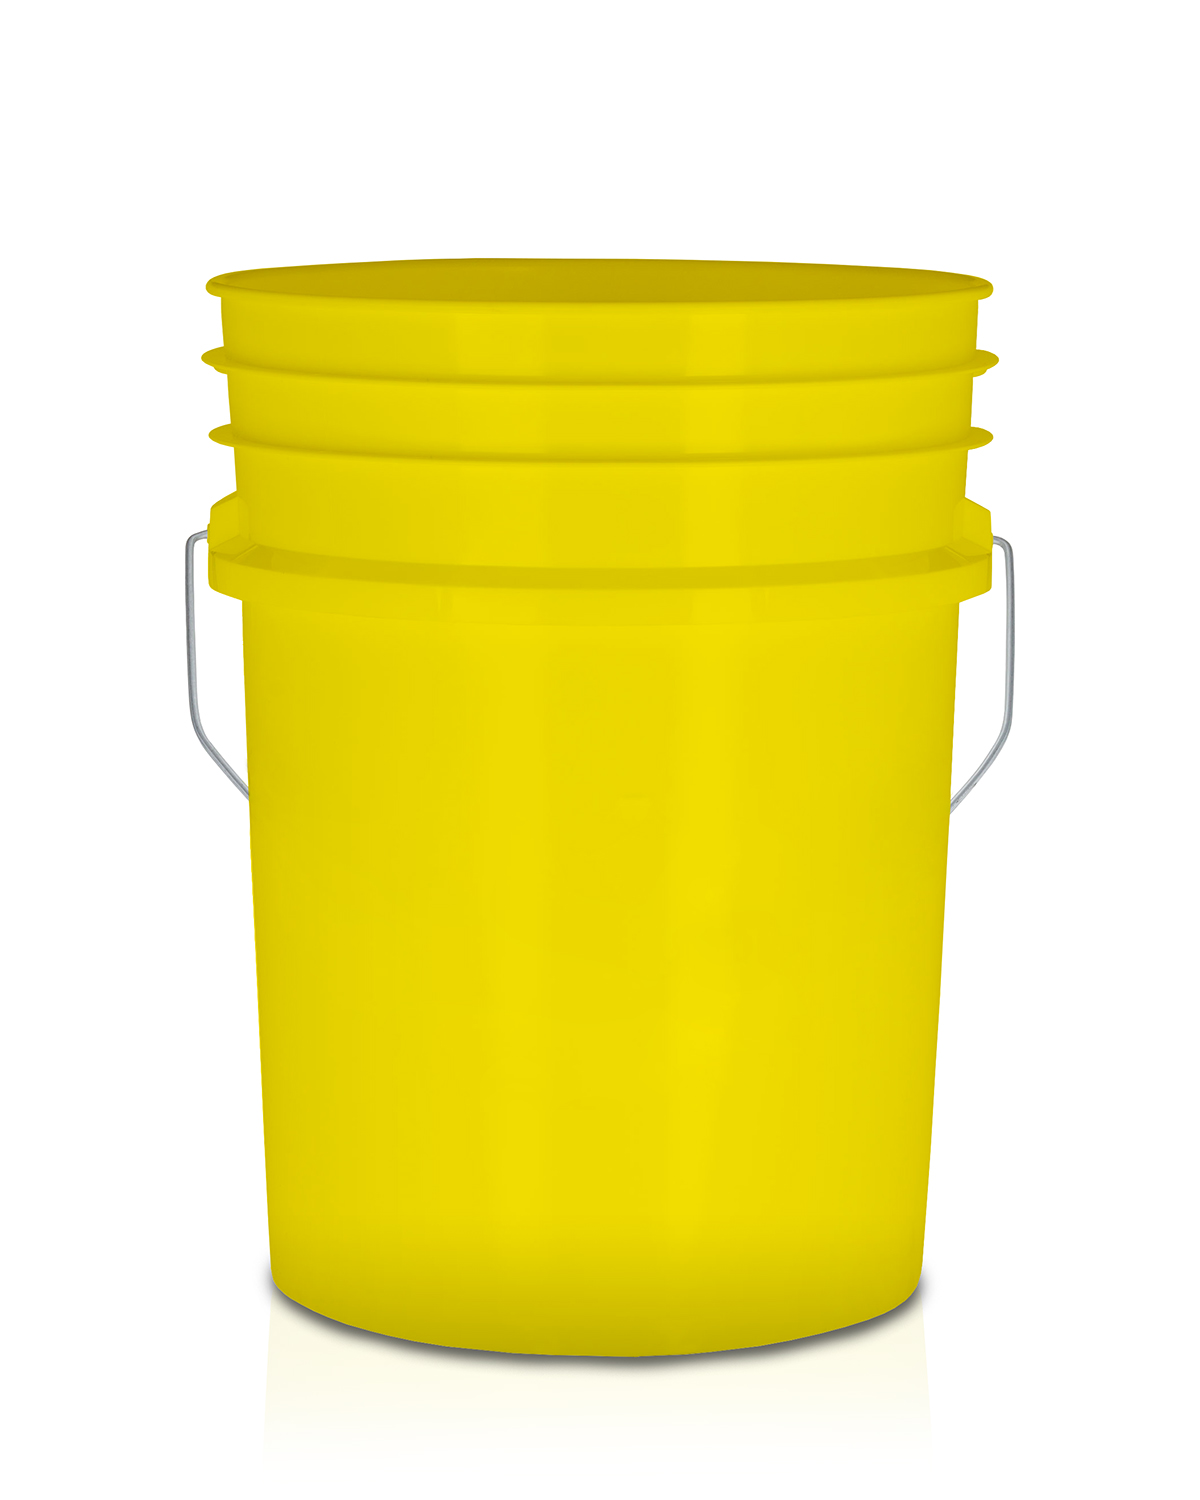 yellow plastic pails